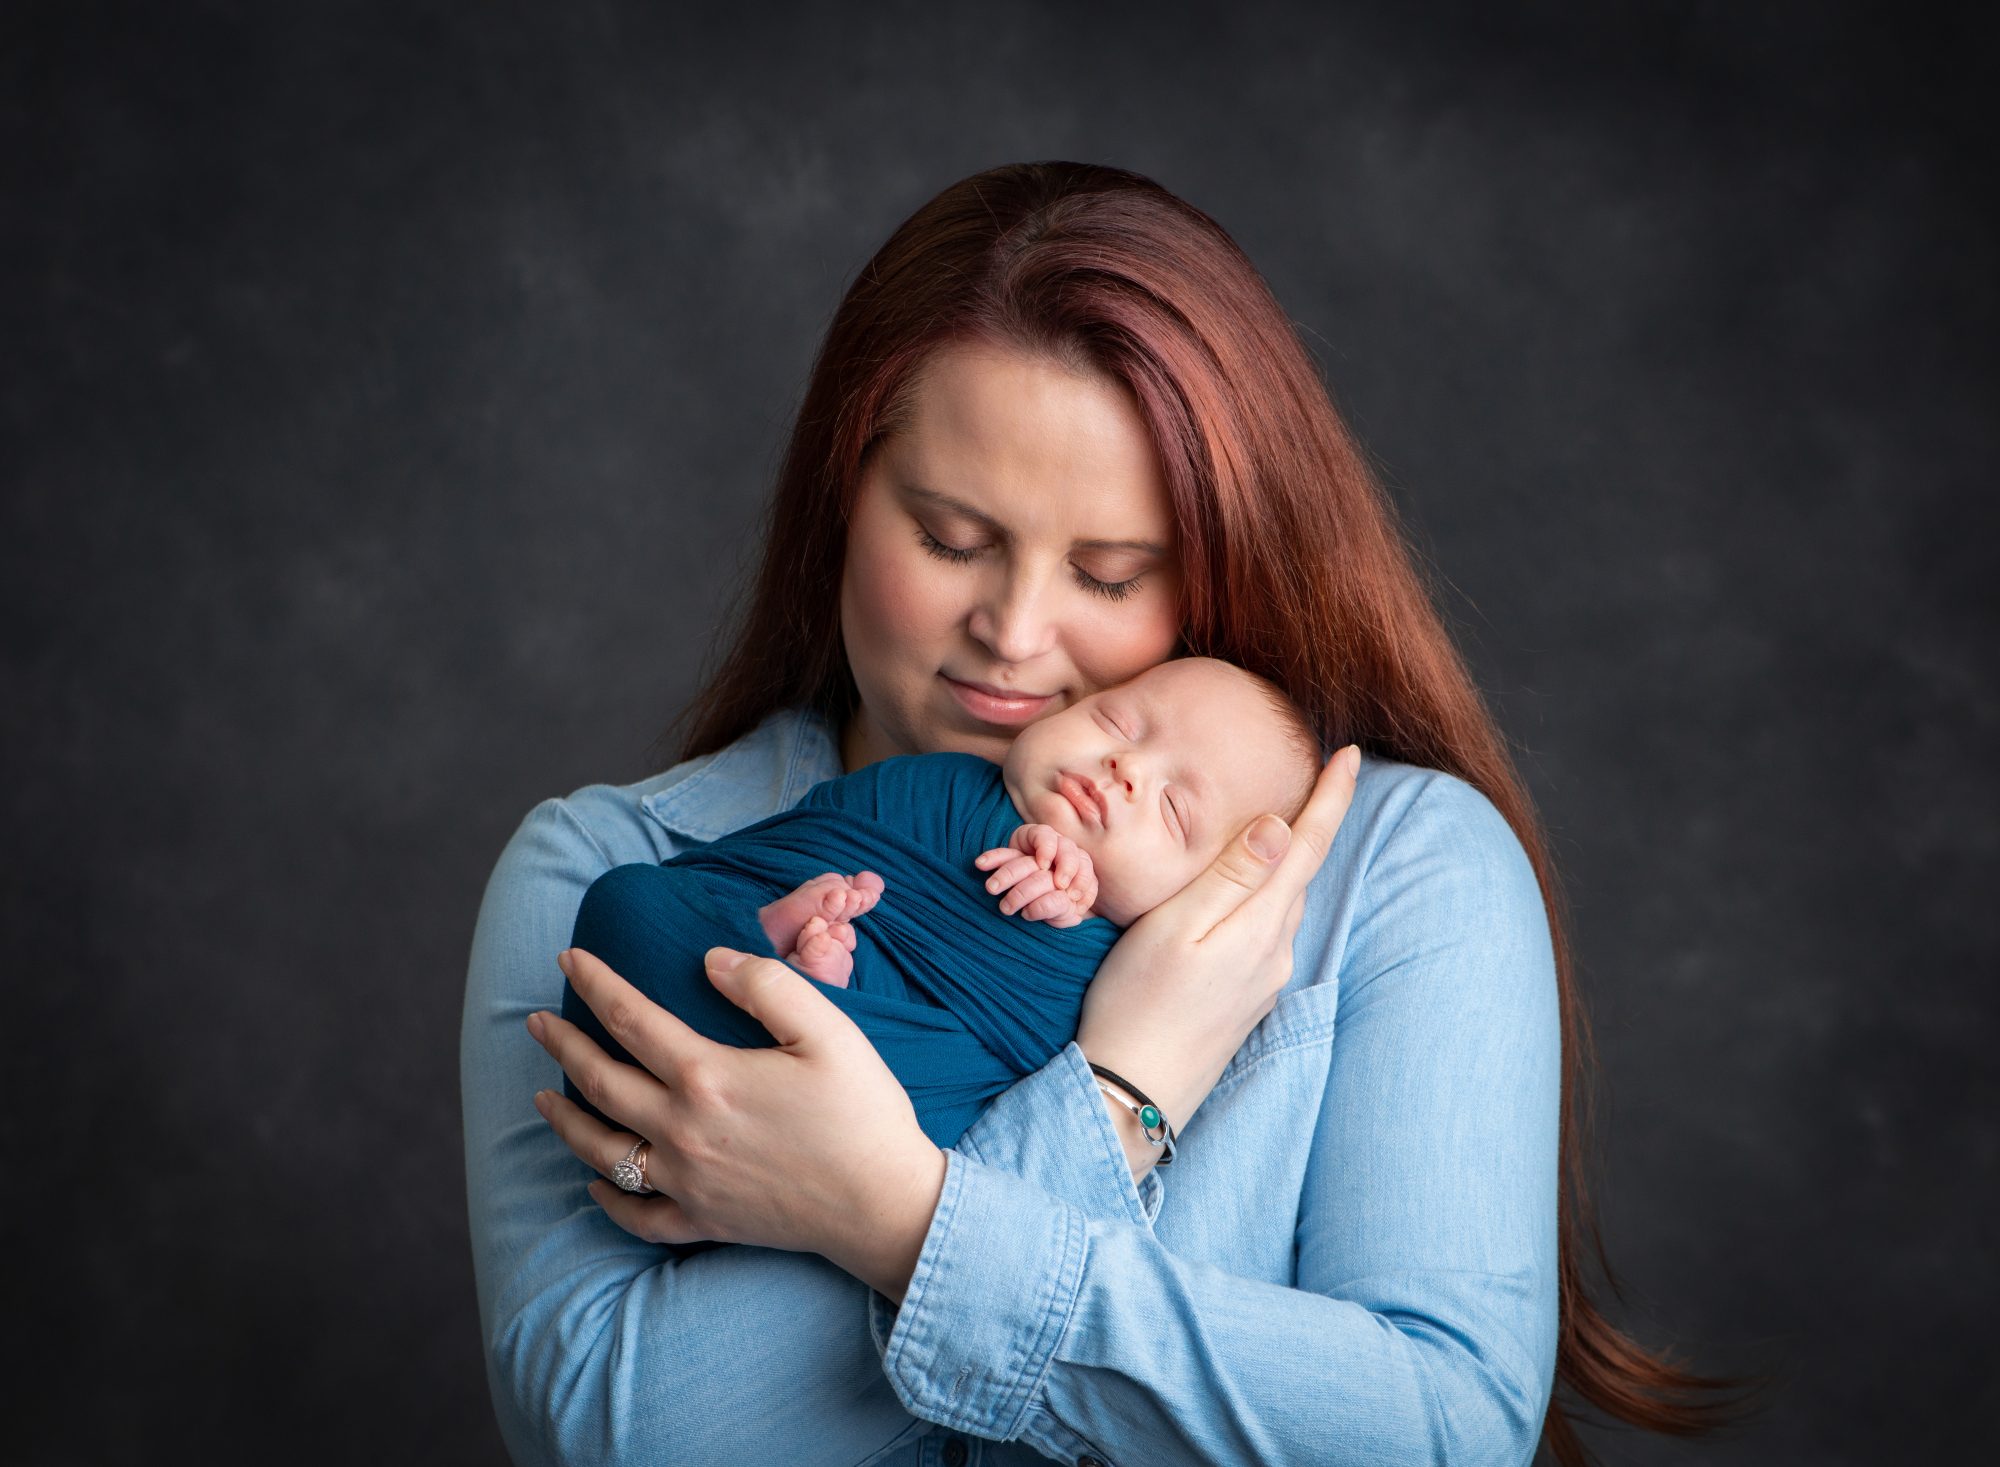 Premie Newborn Photographer In Connecticut